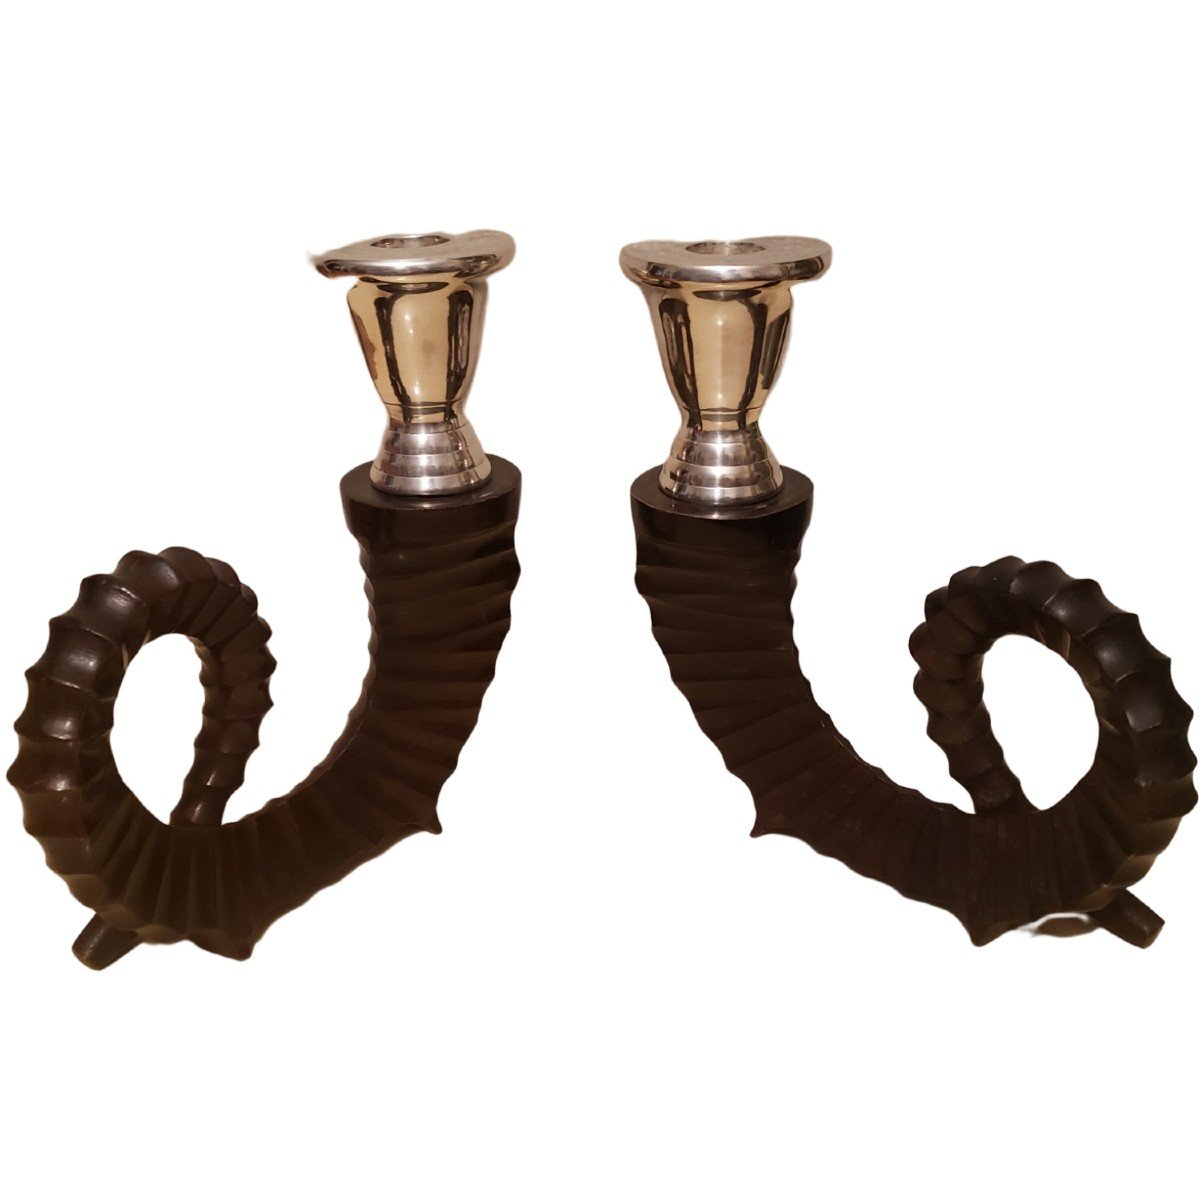 Pair Of Maison Chapman Bronze Candlesticks In The Shape Of Ram's Horns Circa 1970